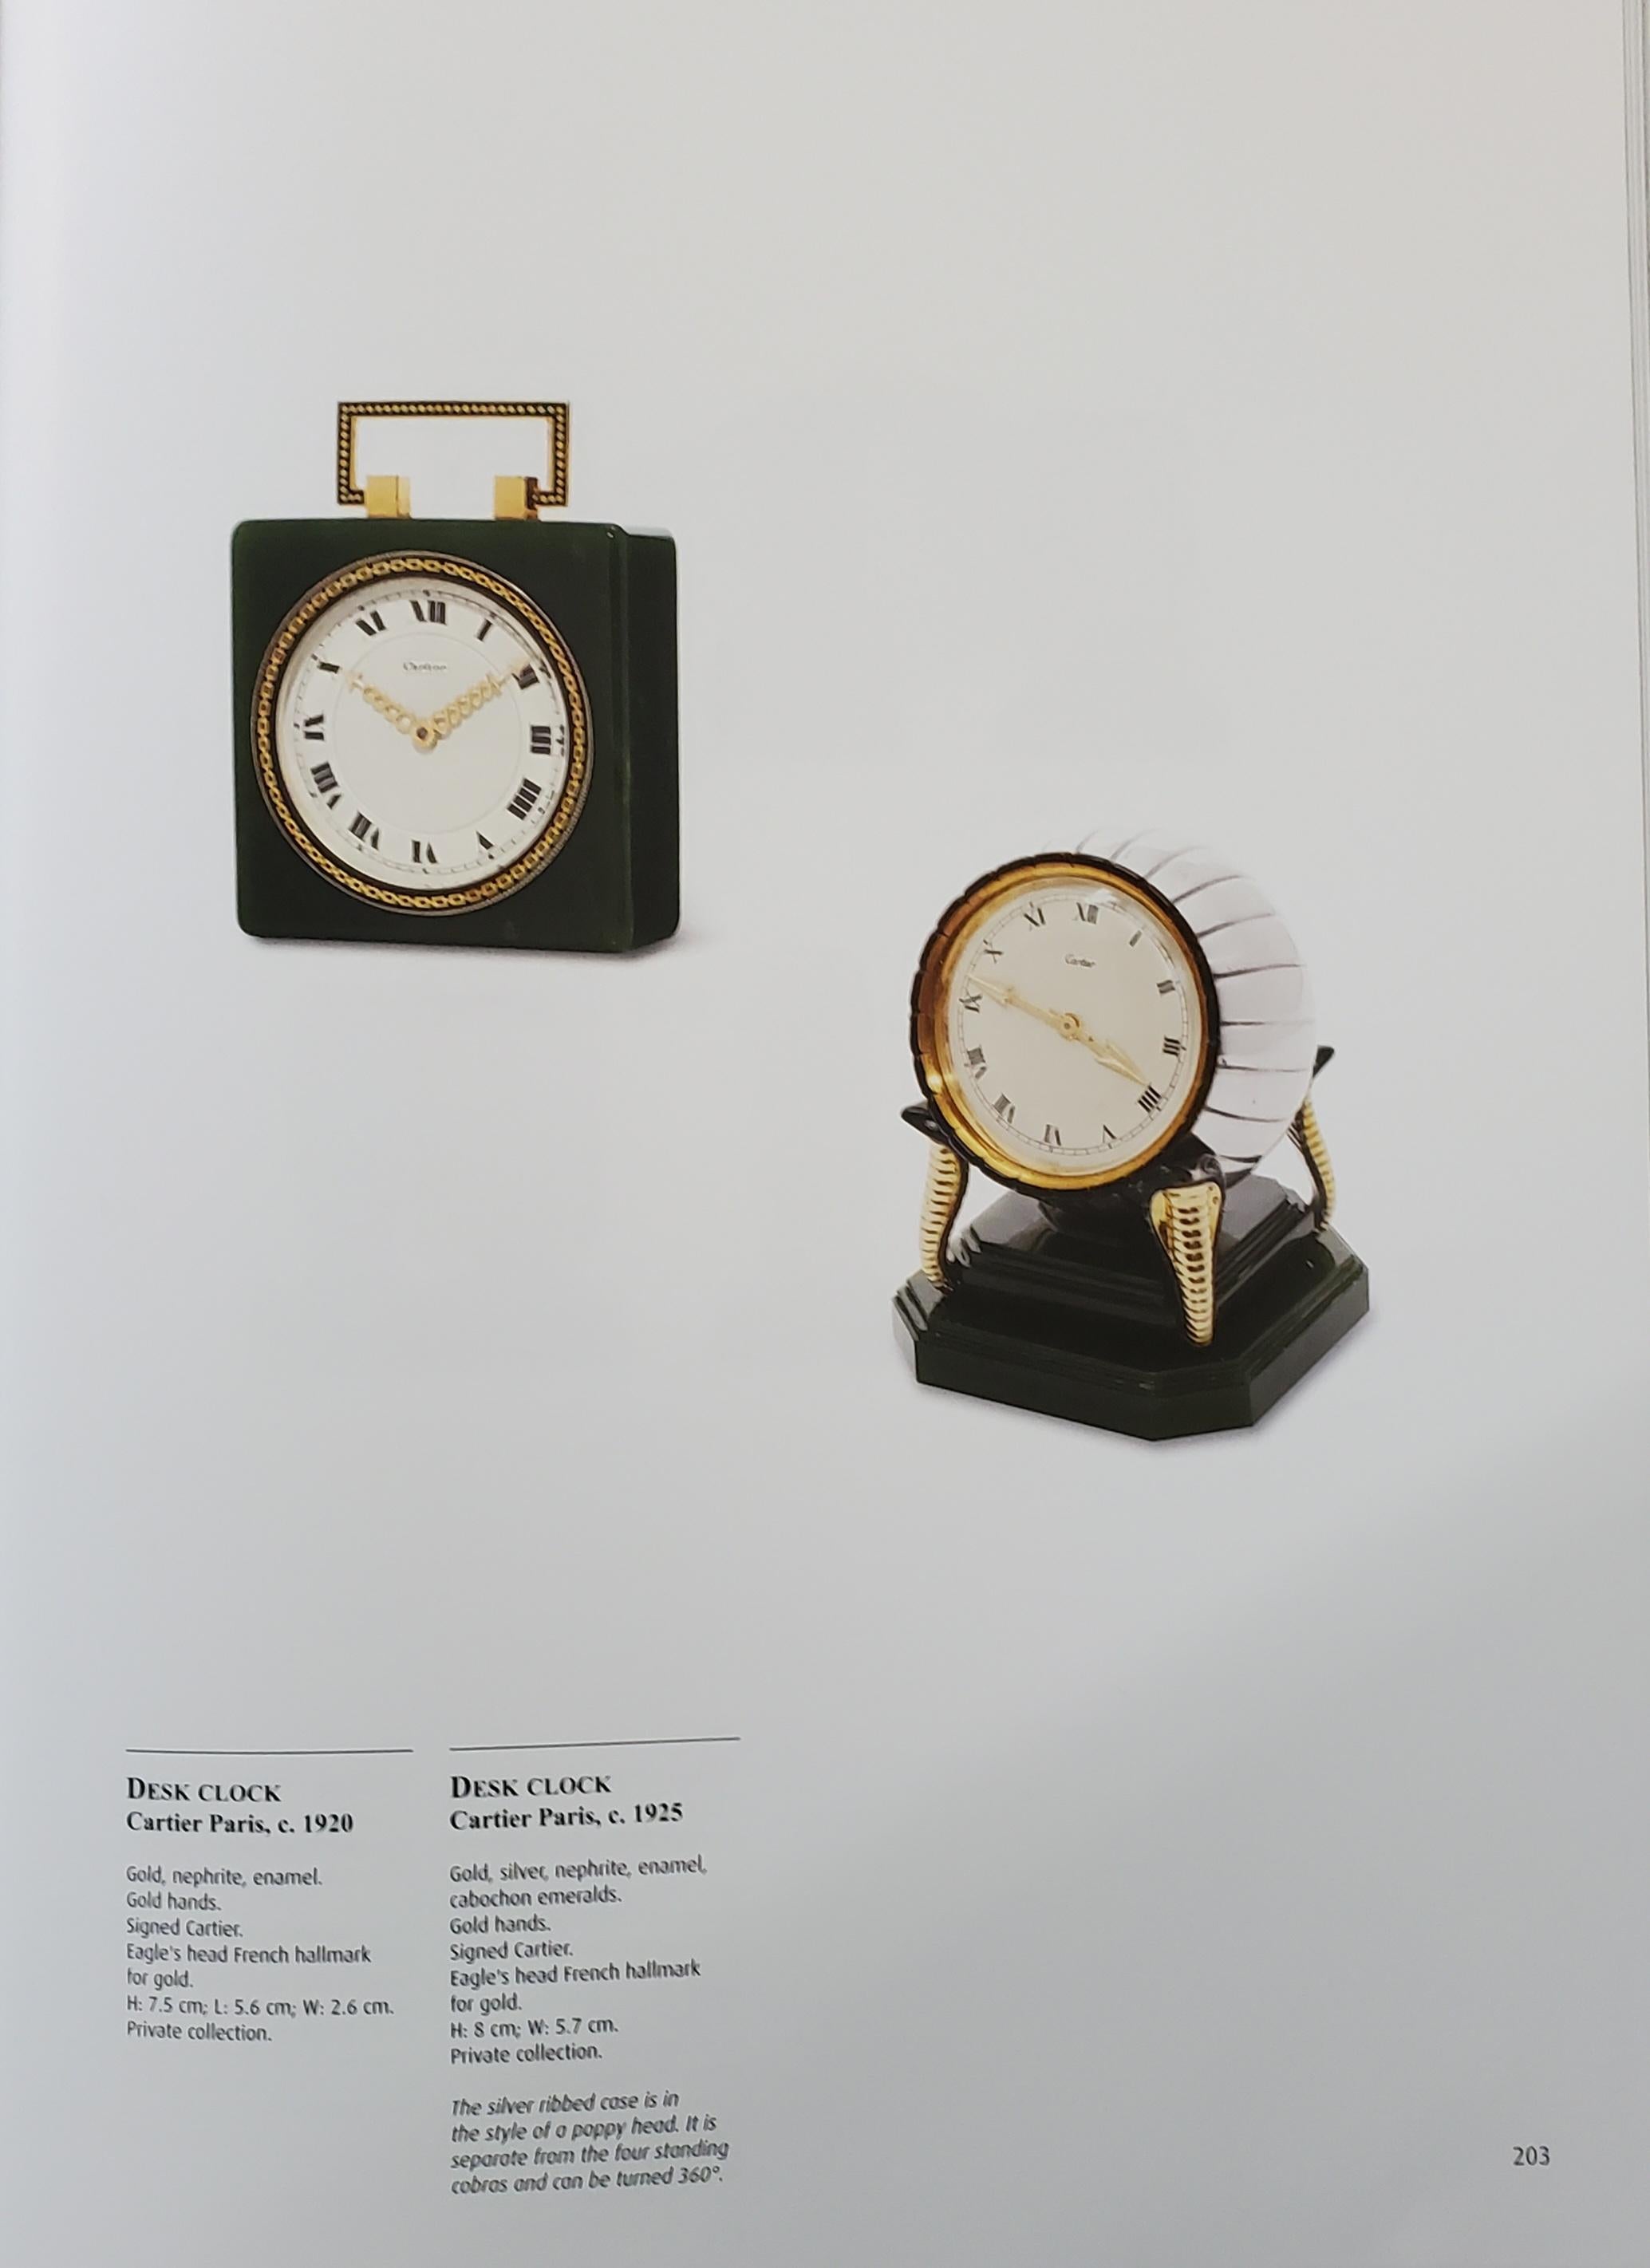 Cartier Paris 1920 Art Deco Chinoiserie 18kt Desk Clock in Nephrite Jade Enamel In Excellent Condition For Sale In Miami, FL